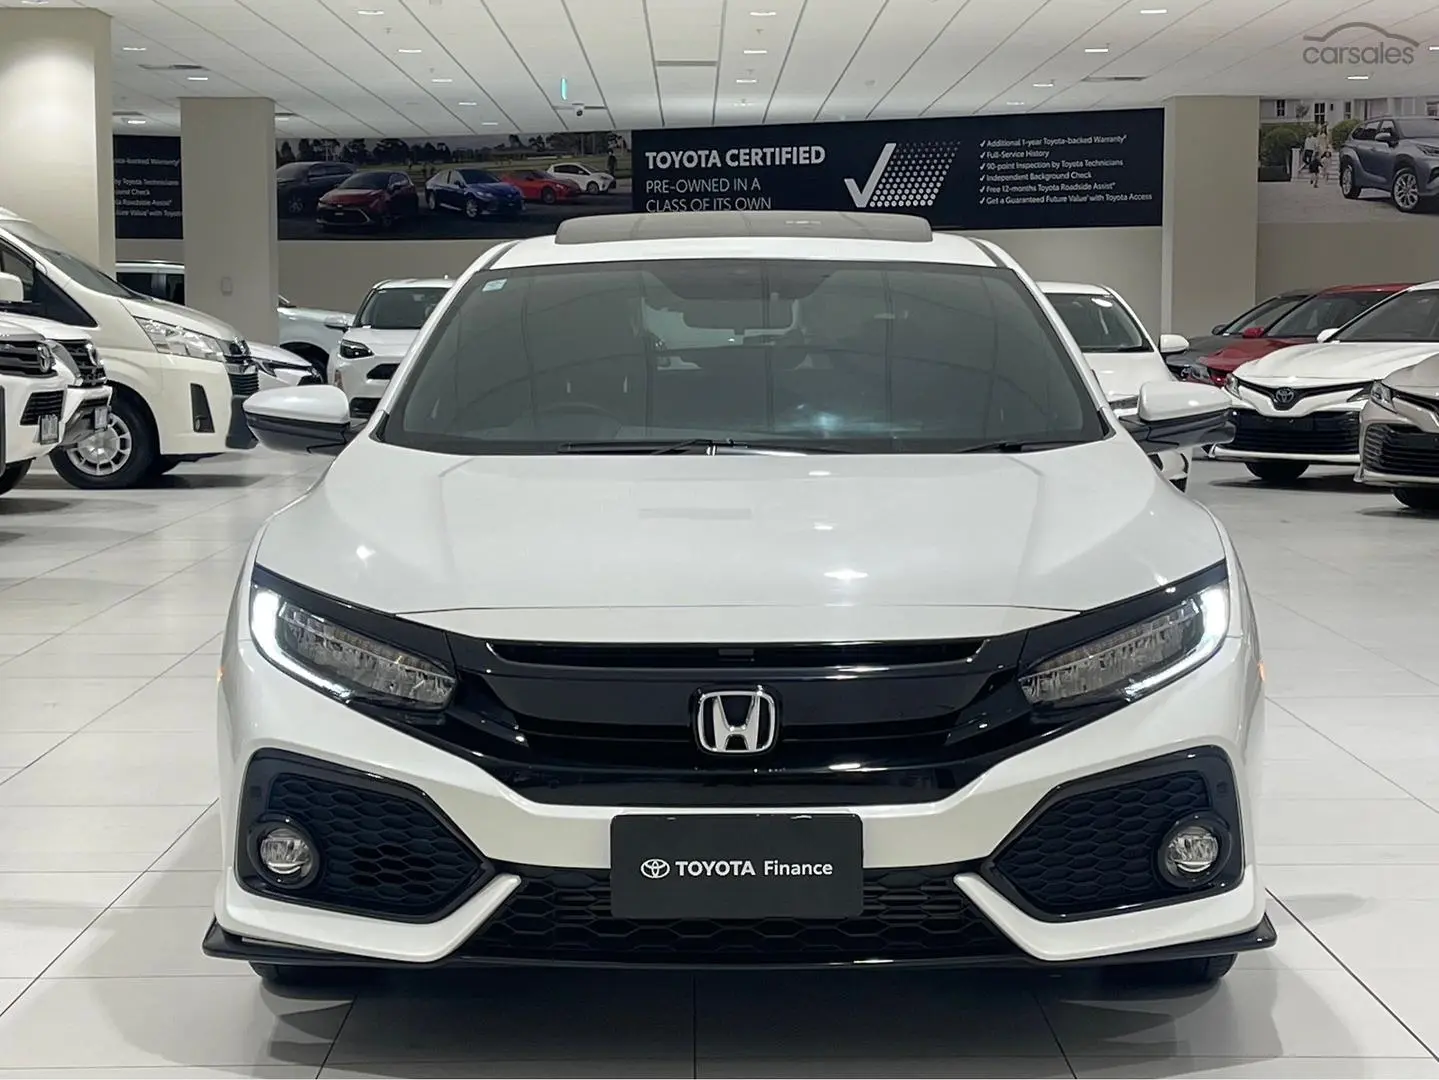 2017 Honda Civic Image 4